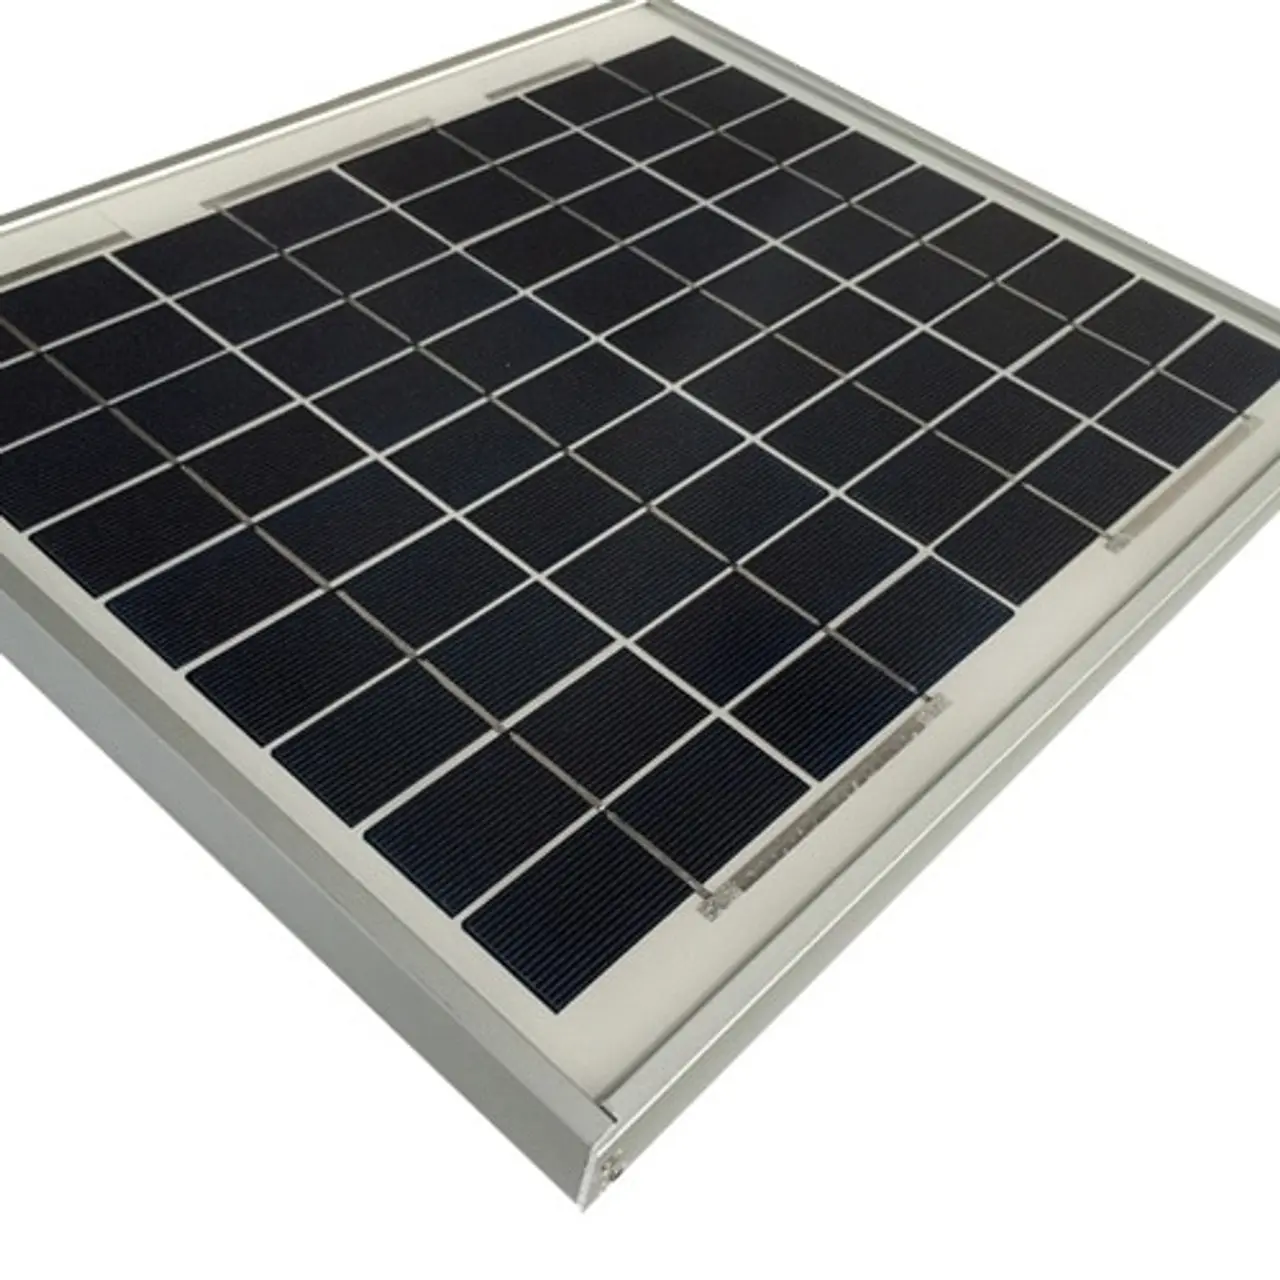 20 watt solar panel - How fast will a 20-watt solar panel charge a battery